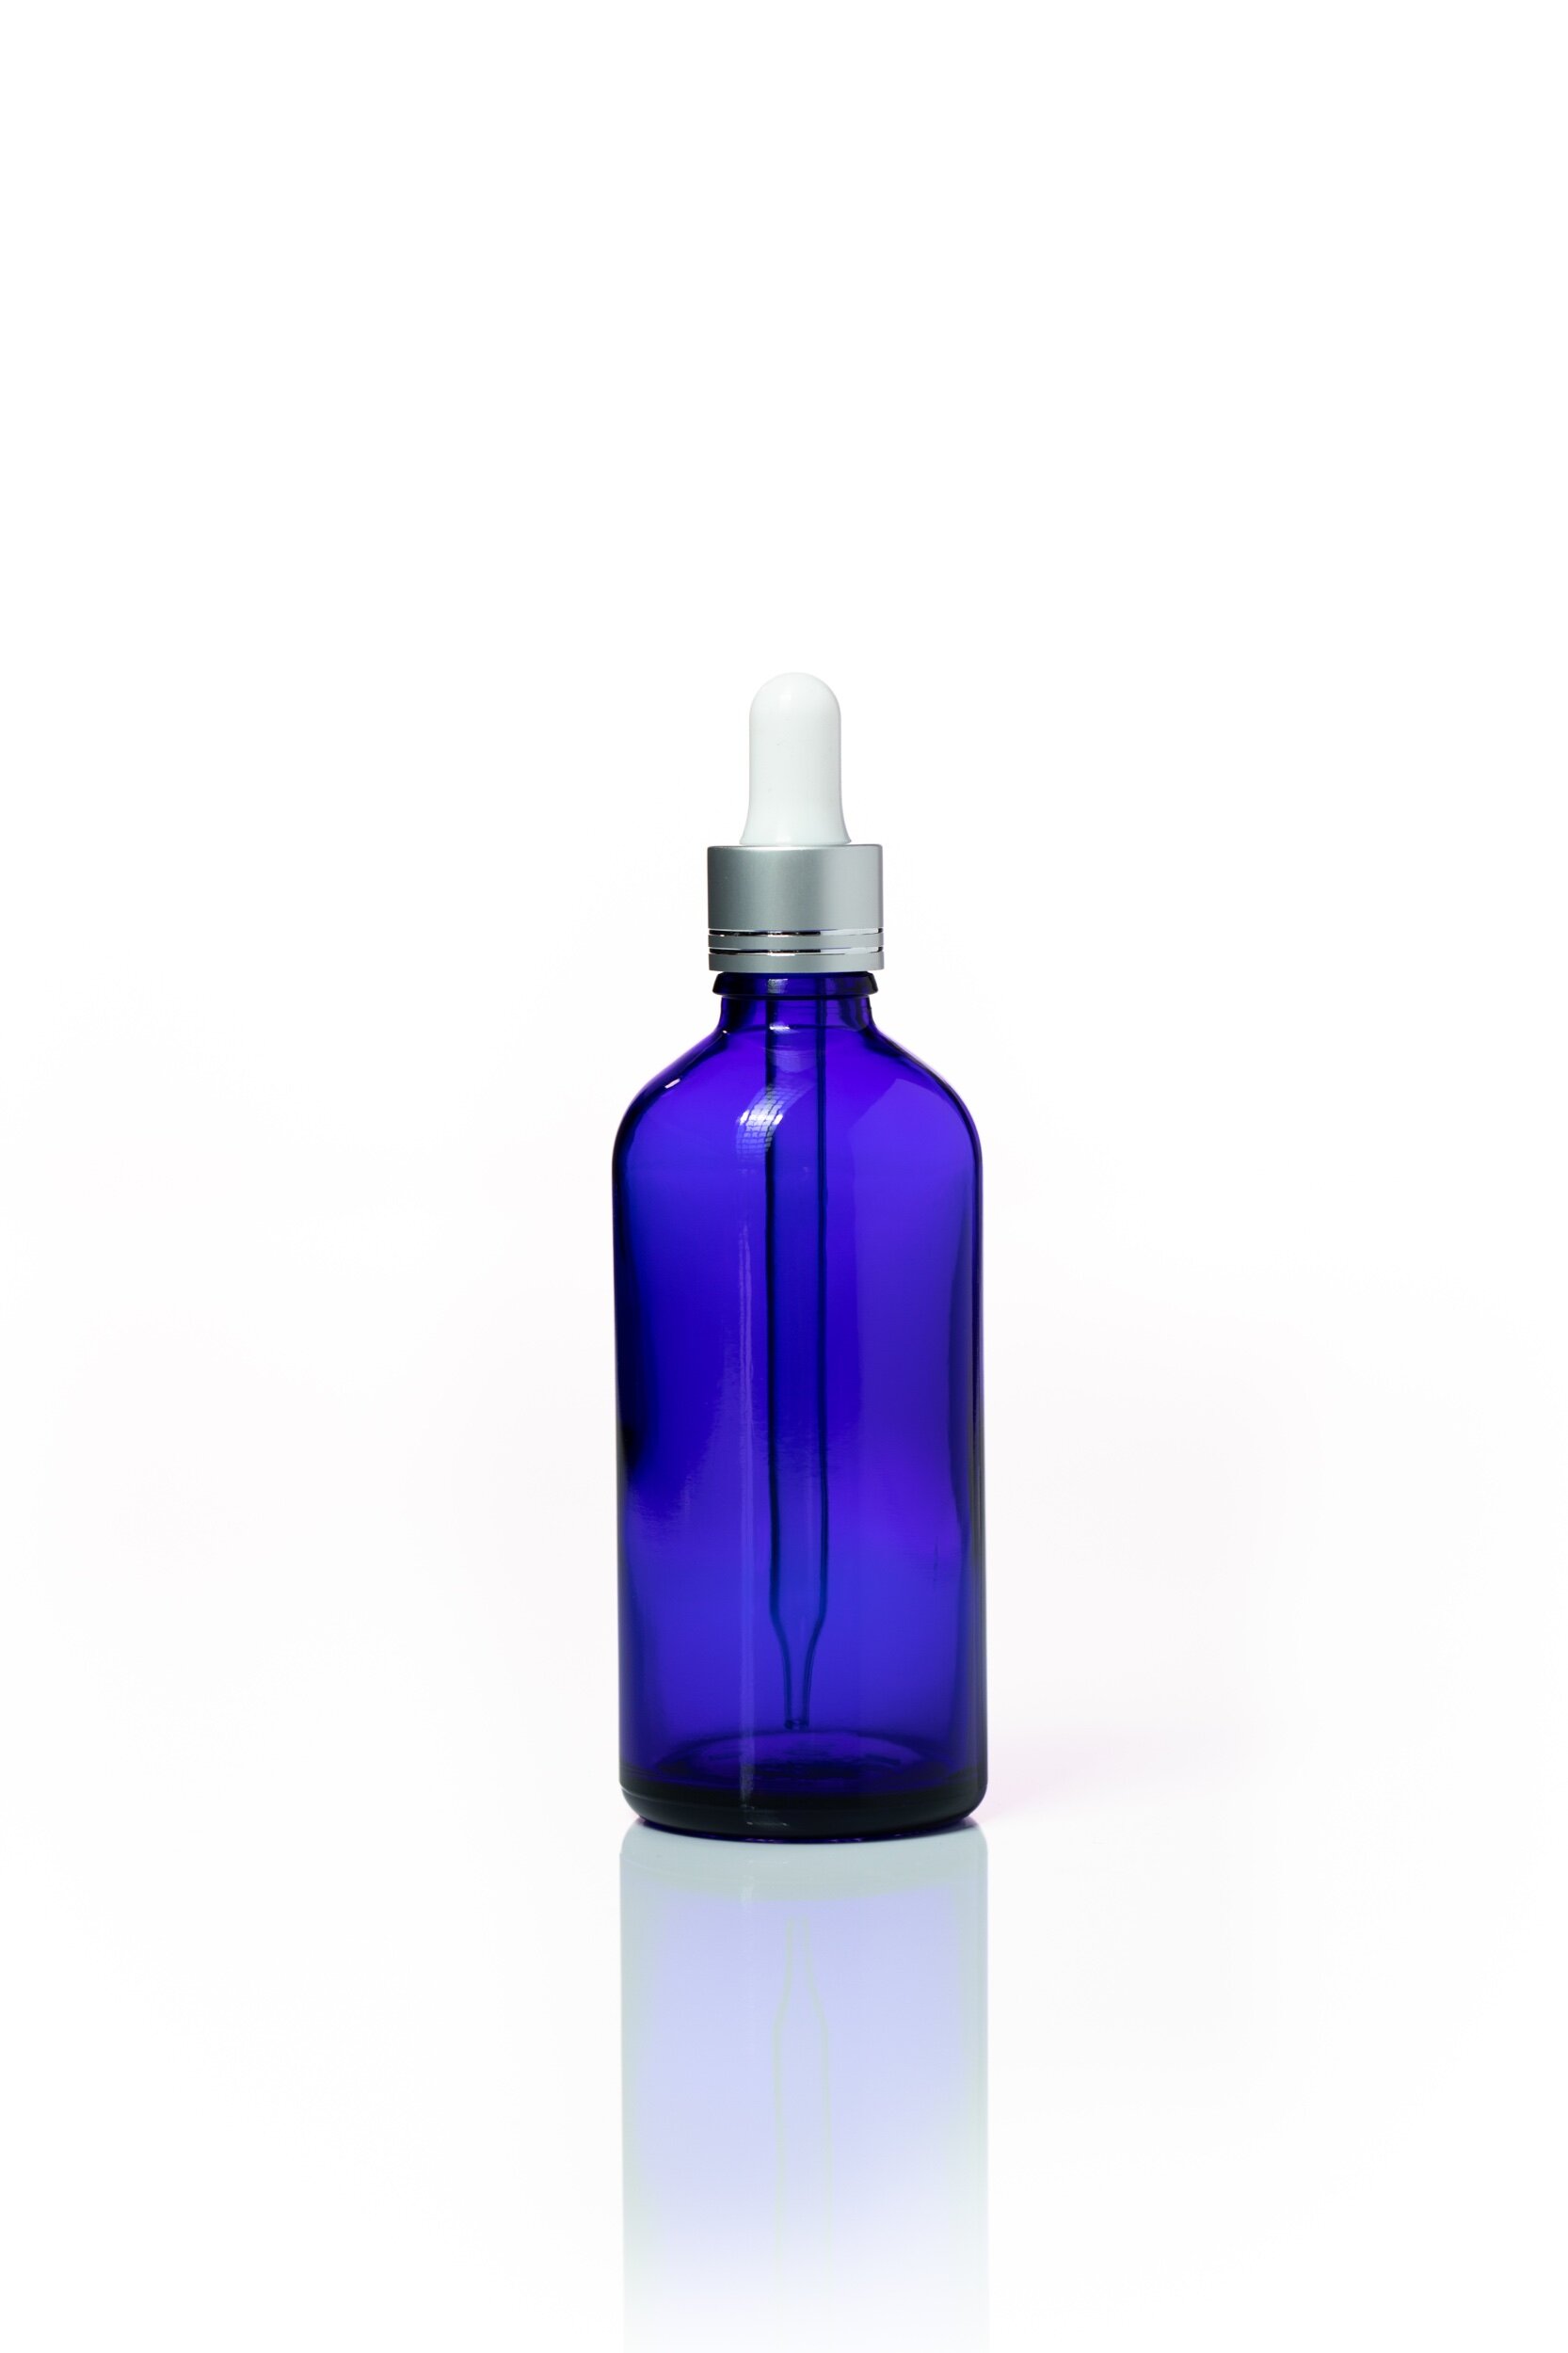 100ml Blue Glass Bottle with Silver dropper 4480 x 6720.jpeg